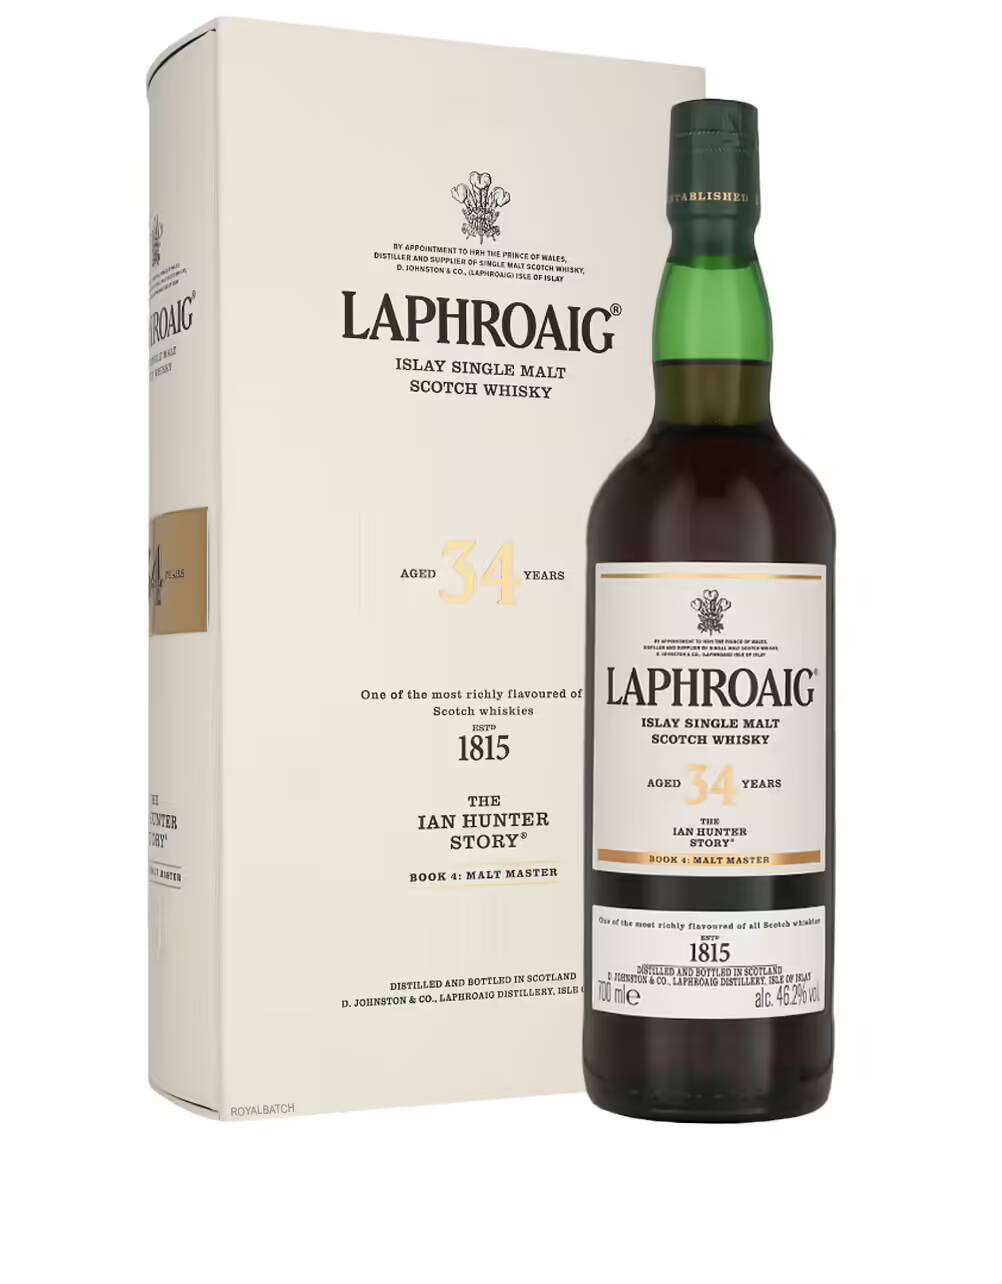 Laphroaig The Ian Hunter Story 34 Year Old Single Malt Scotch Whisky 